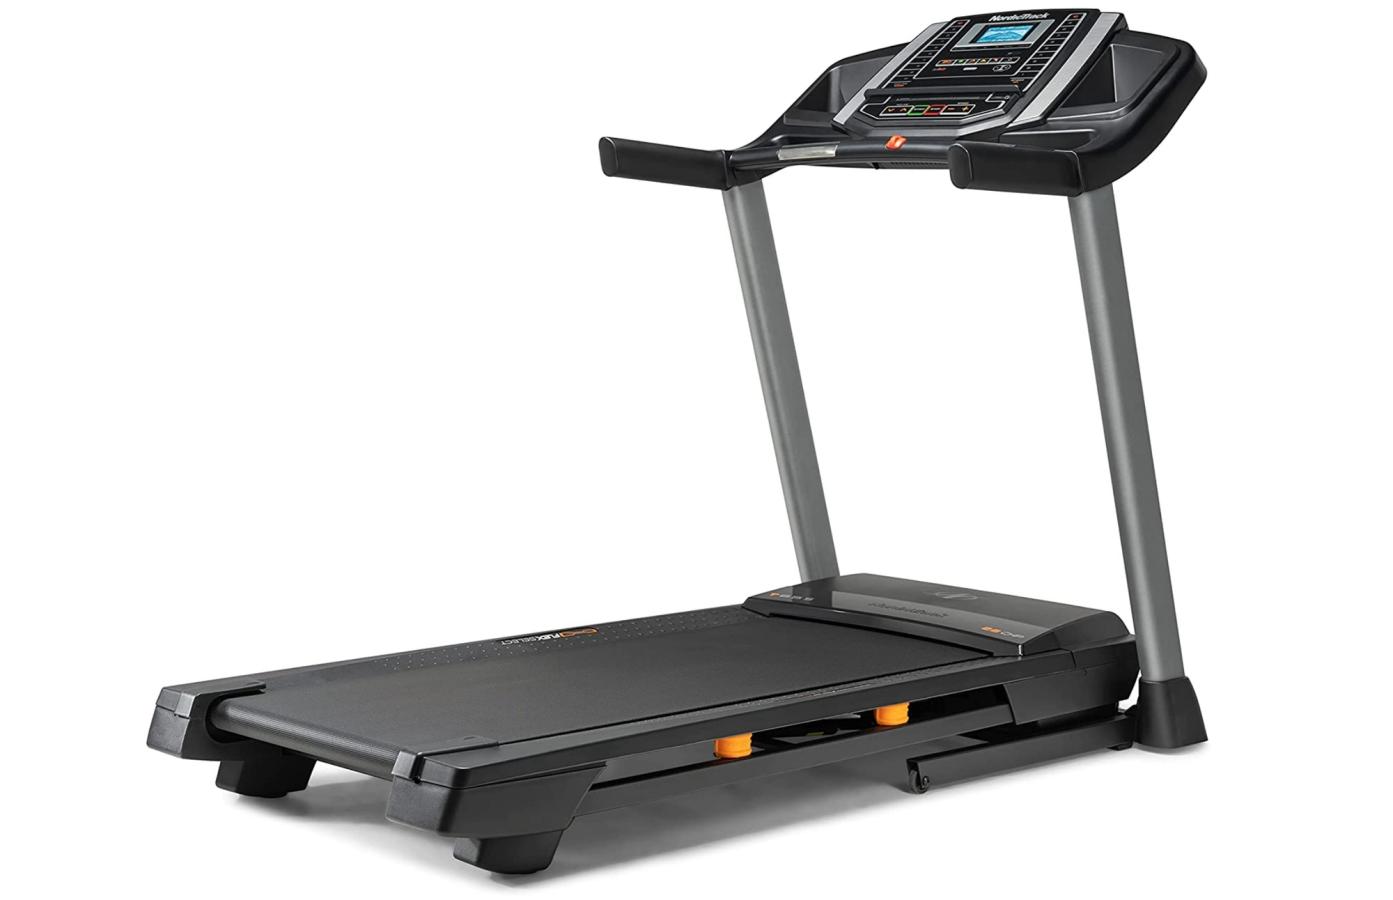 Treadmill vs elliptical NordicTrack product image of a black treadmill.